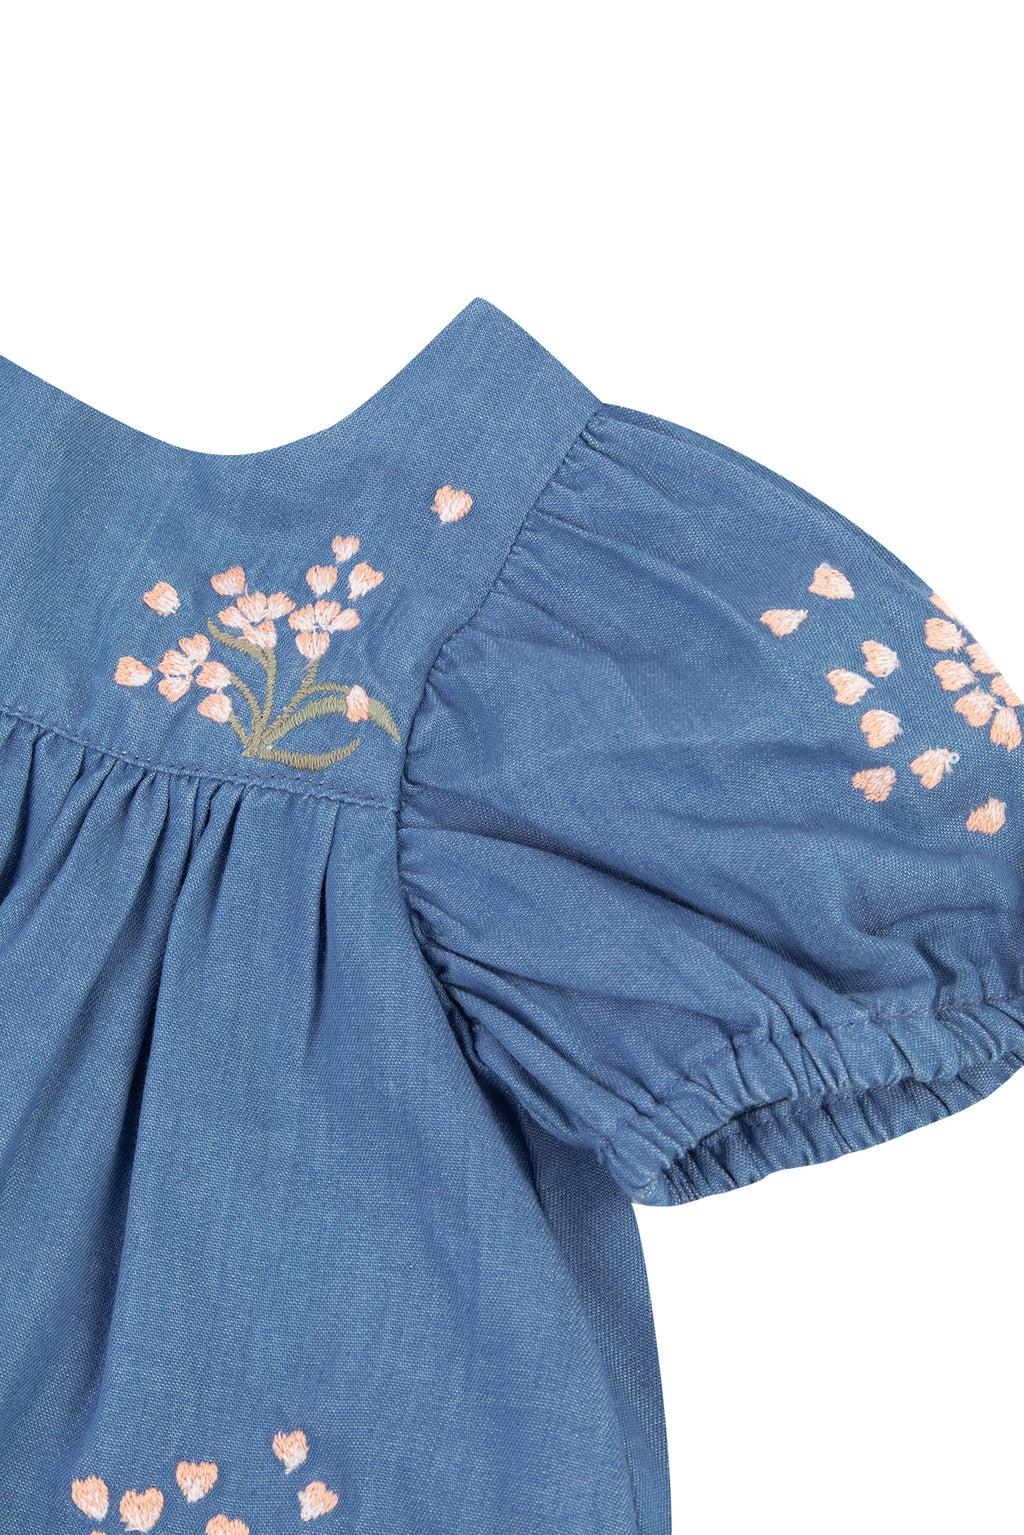 Vestido - Azul Denim chambray fleuri